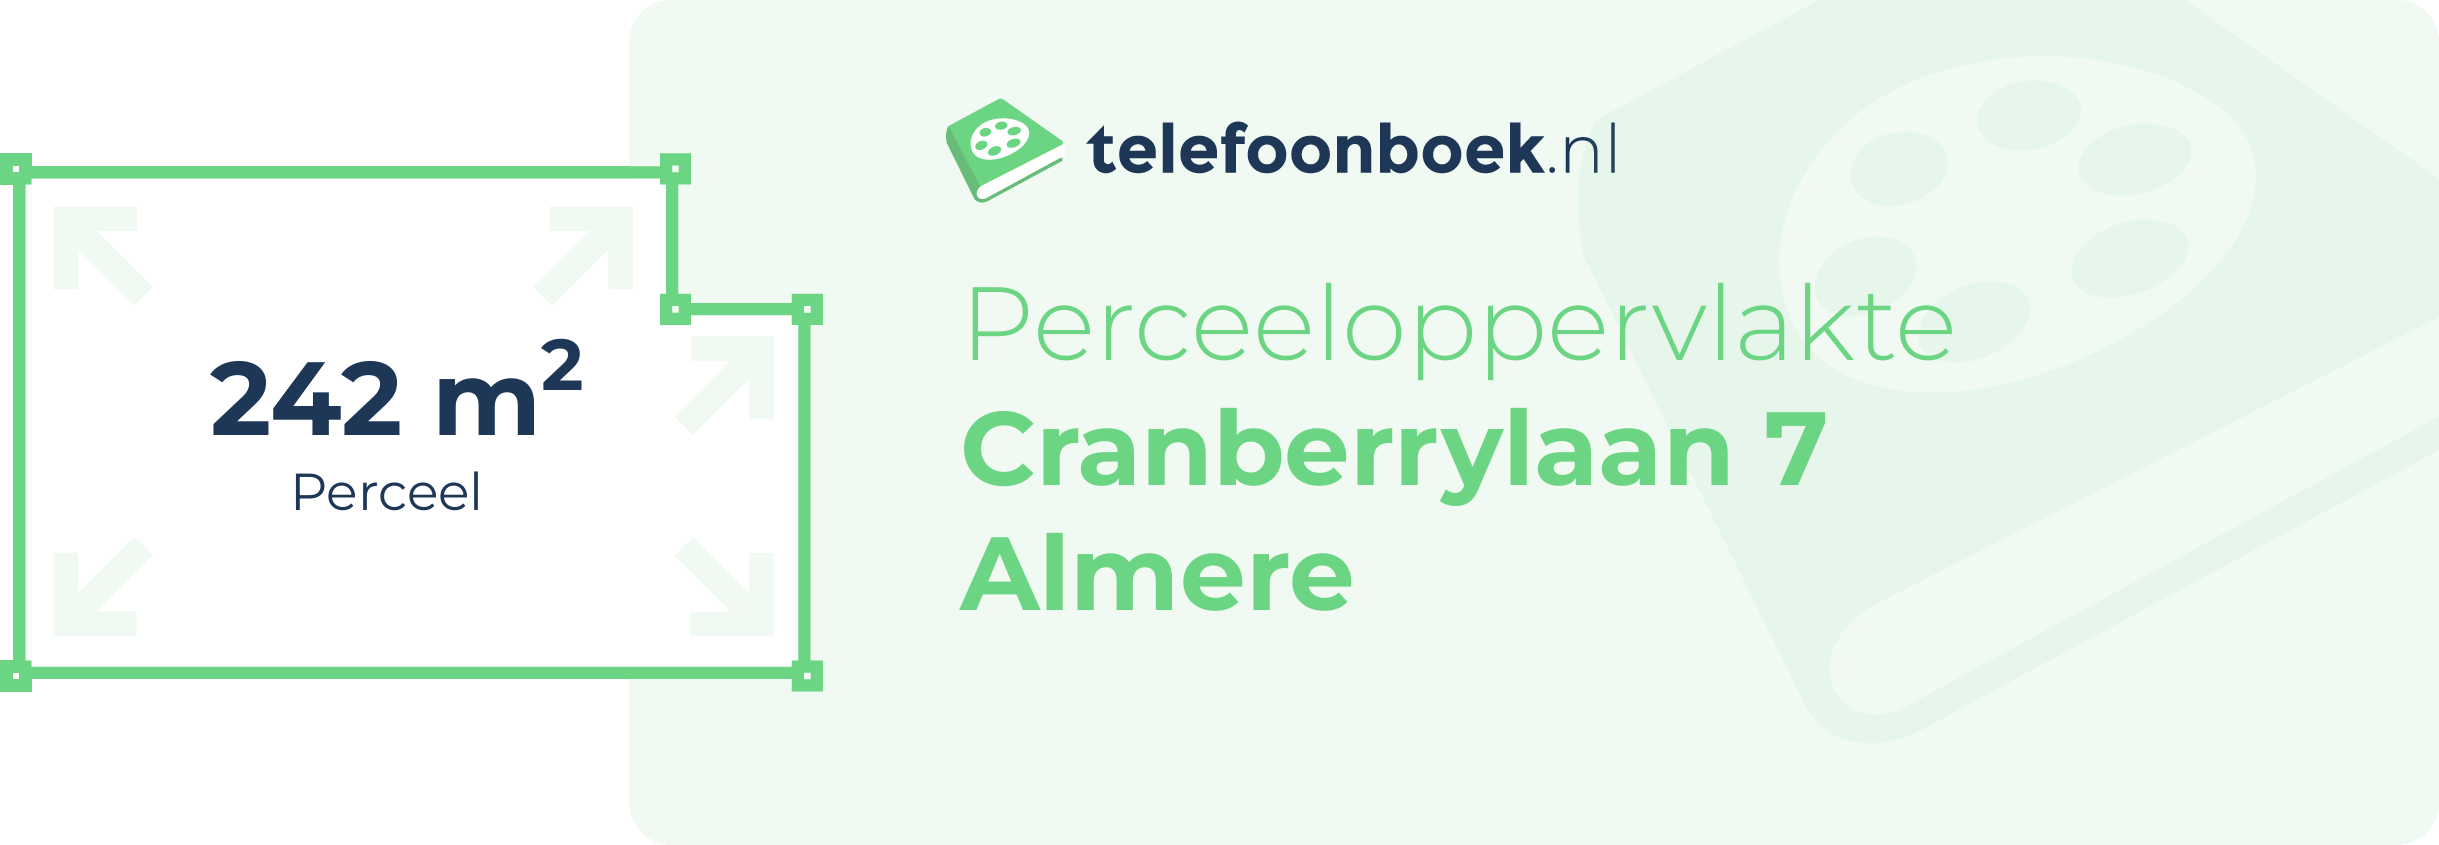 Perceeloppervlakte Cranberrylaan 7 Almere